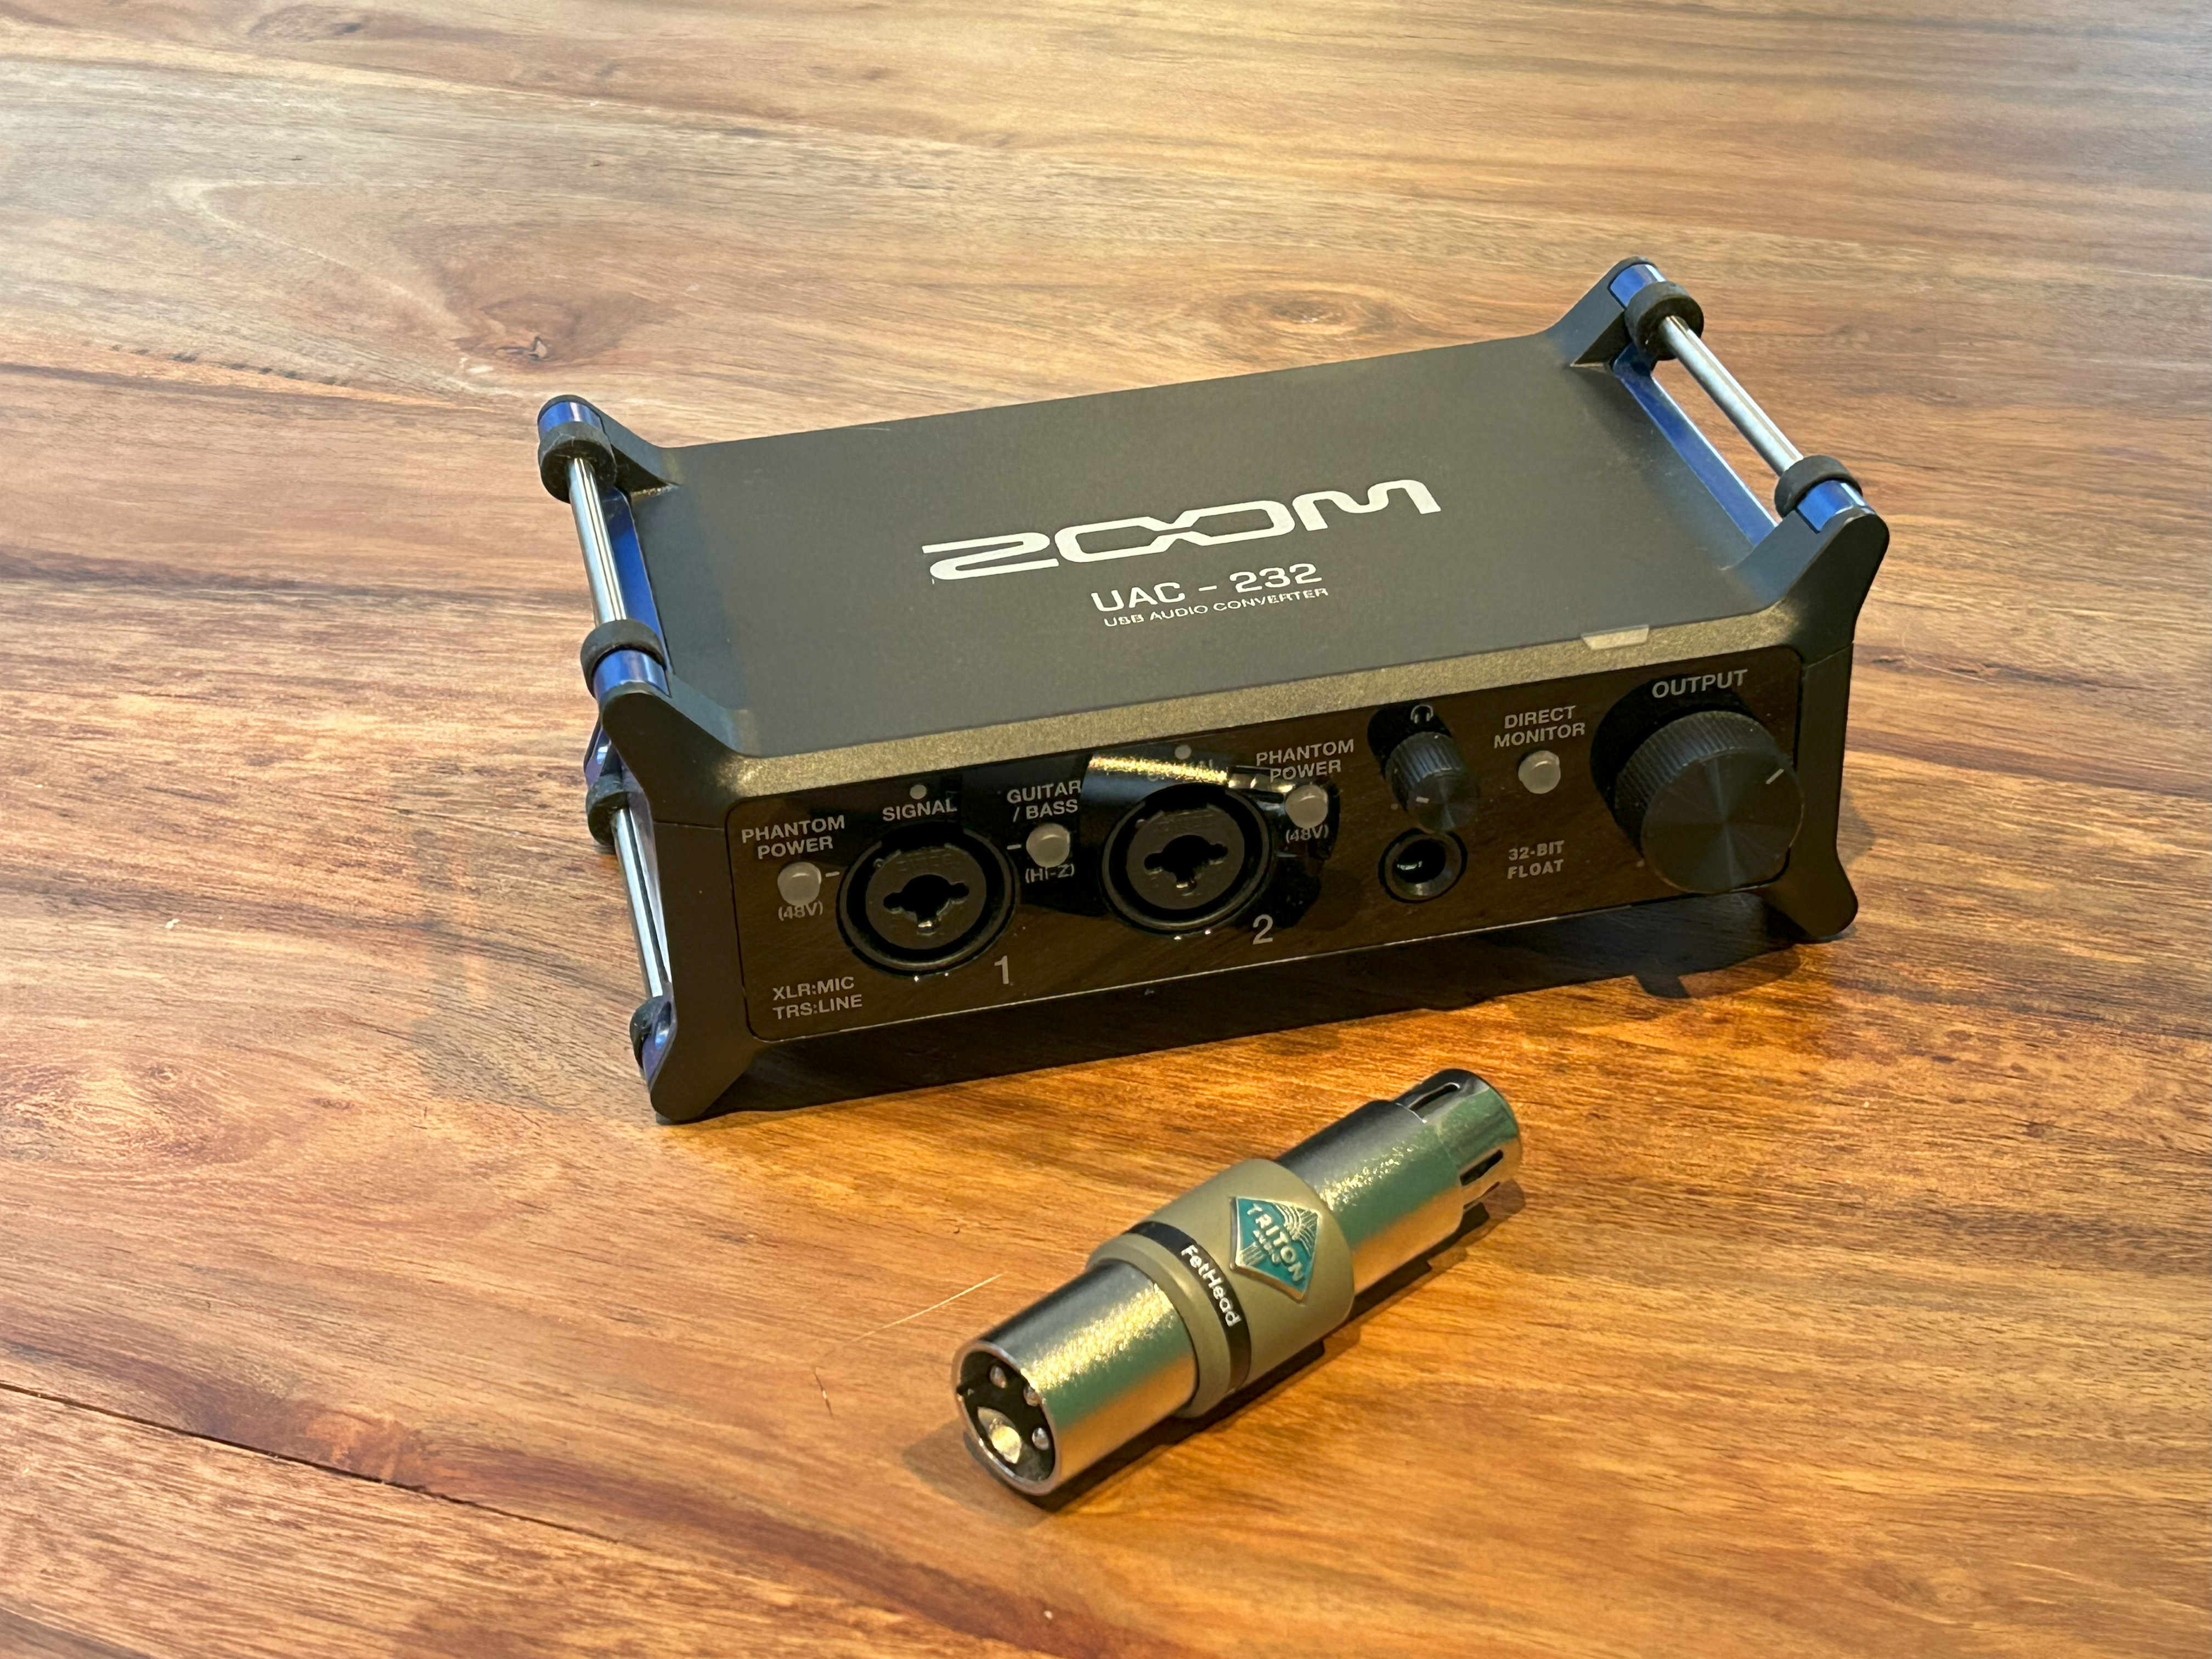 The Zoom UAC-232